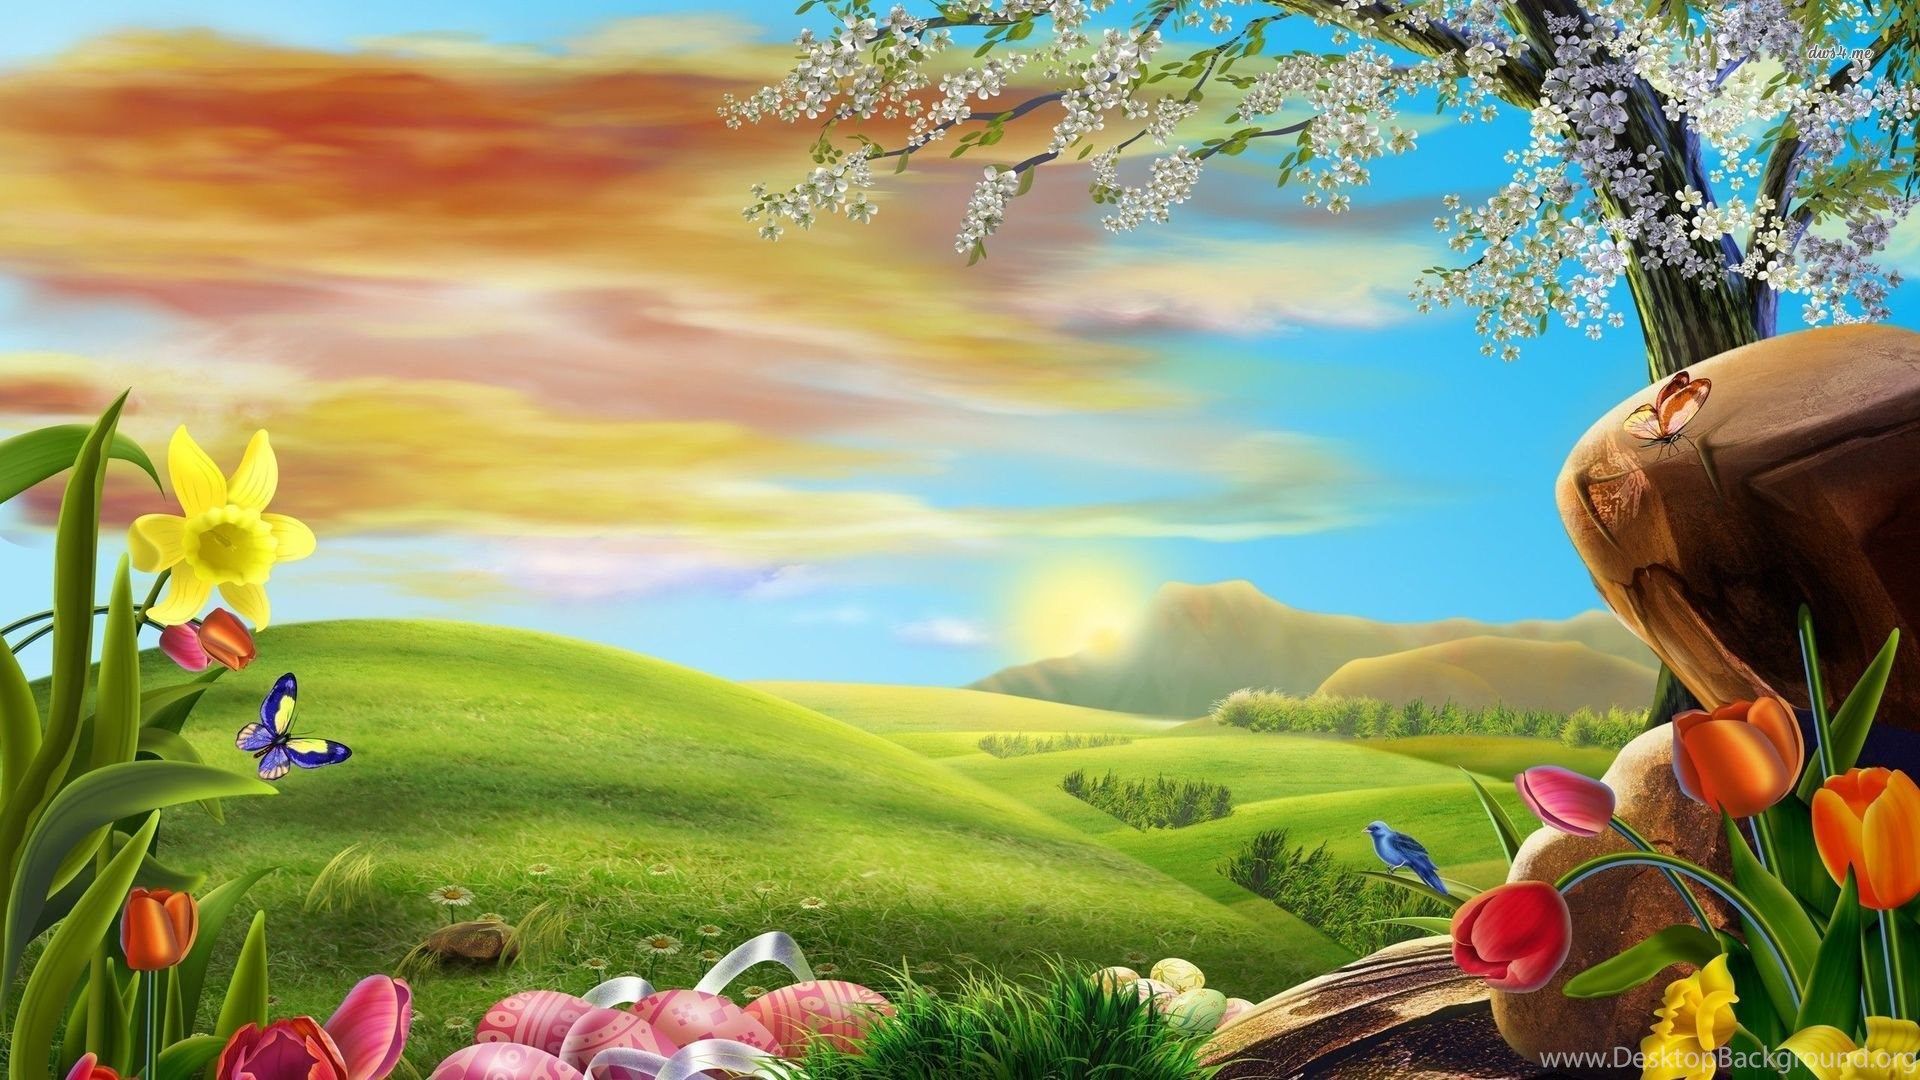 Easter Wallpaper HD Download Free Desktop Background